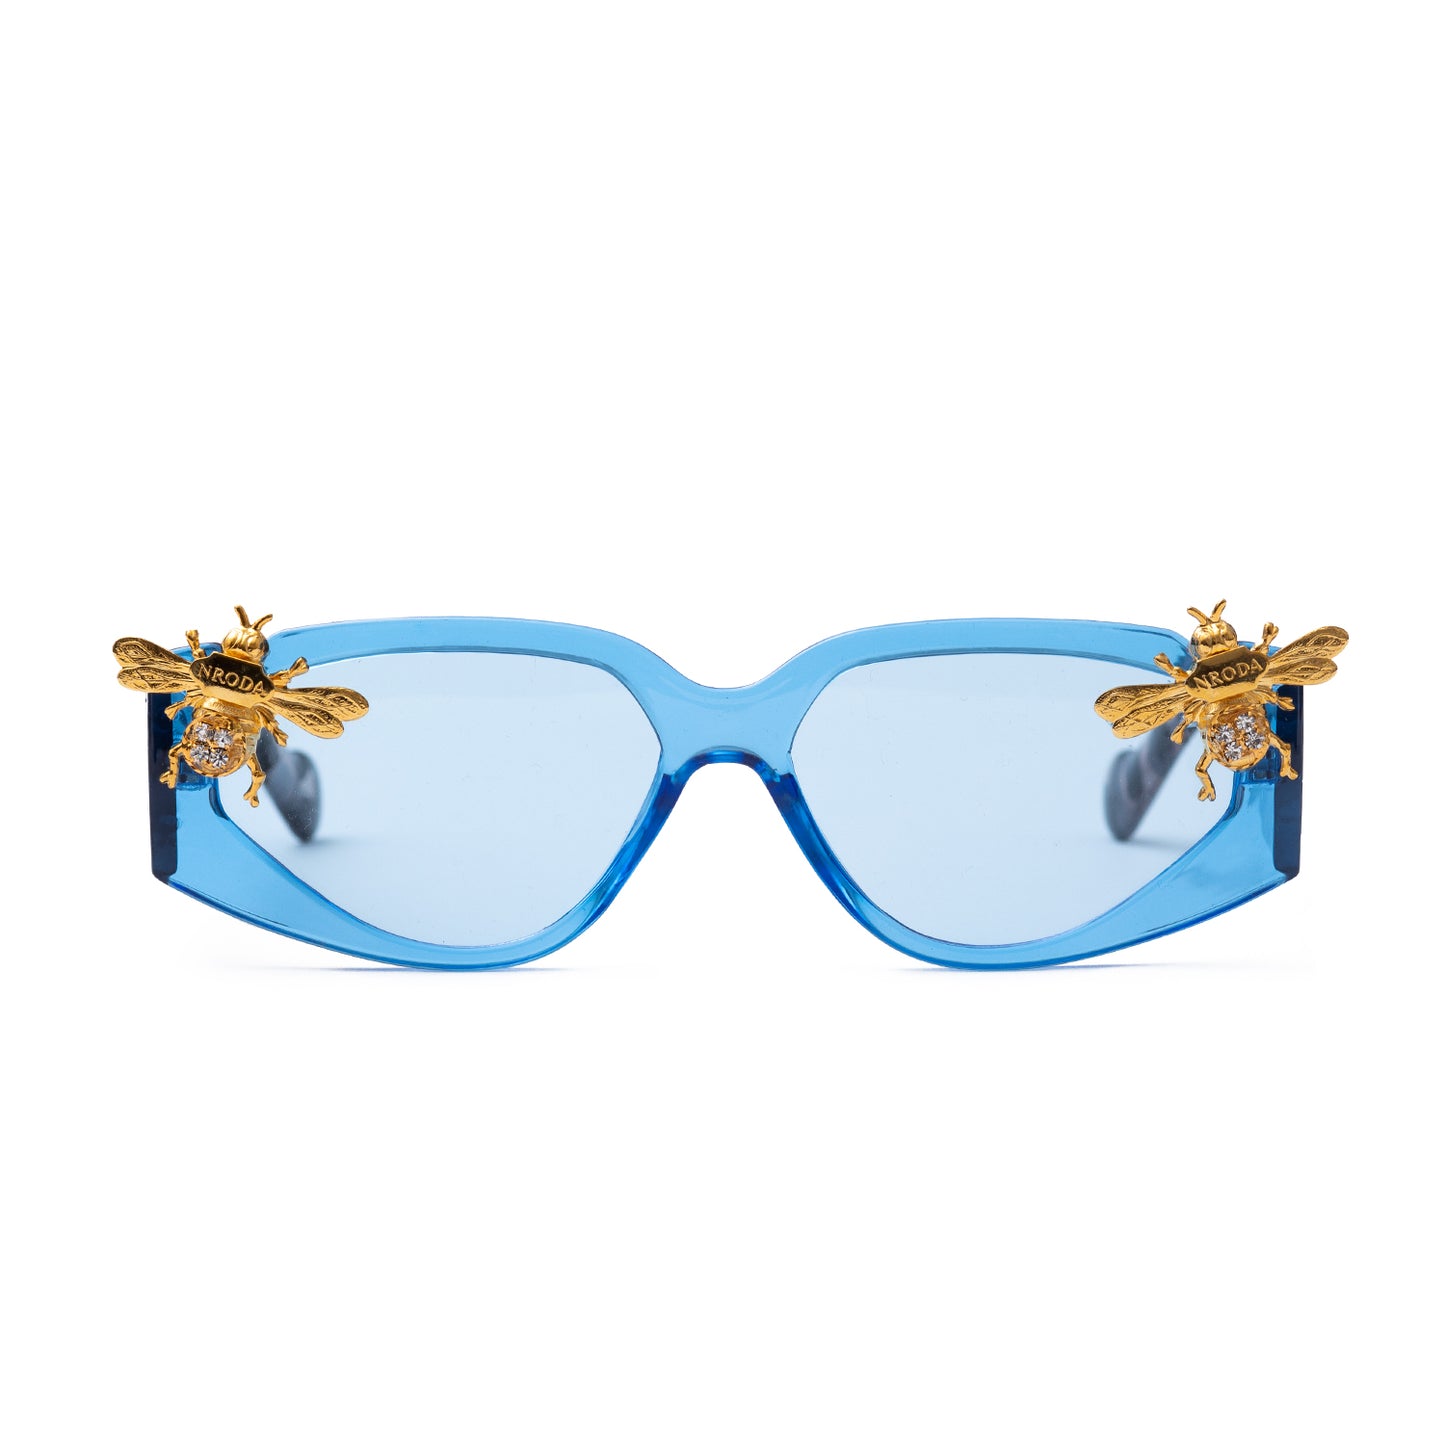 Nroda Riviera Bee - Gemstone Edition Sapphire Blue Eyewear Sunglasses Collection, Tnemnroda man- NRODA